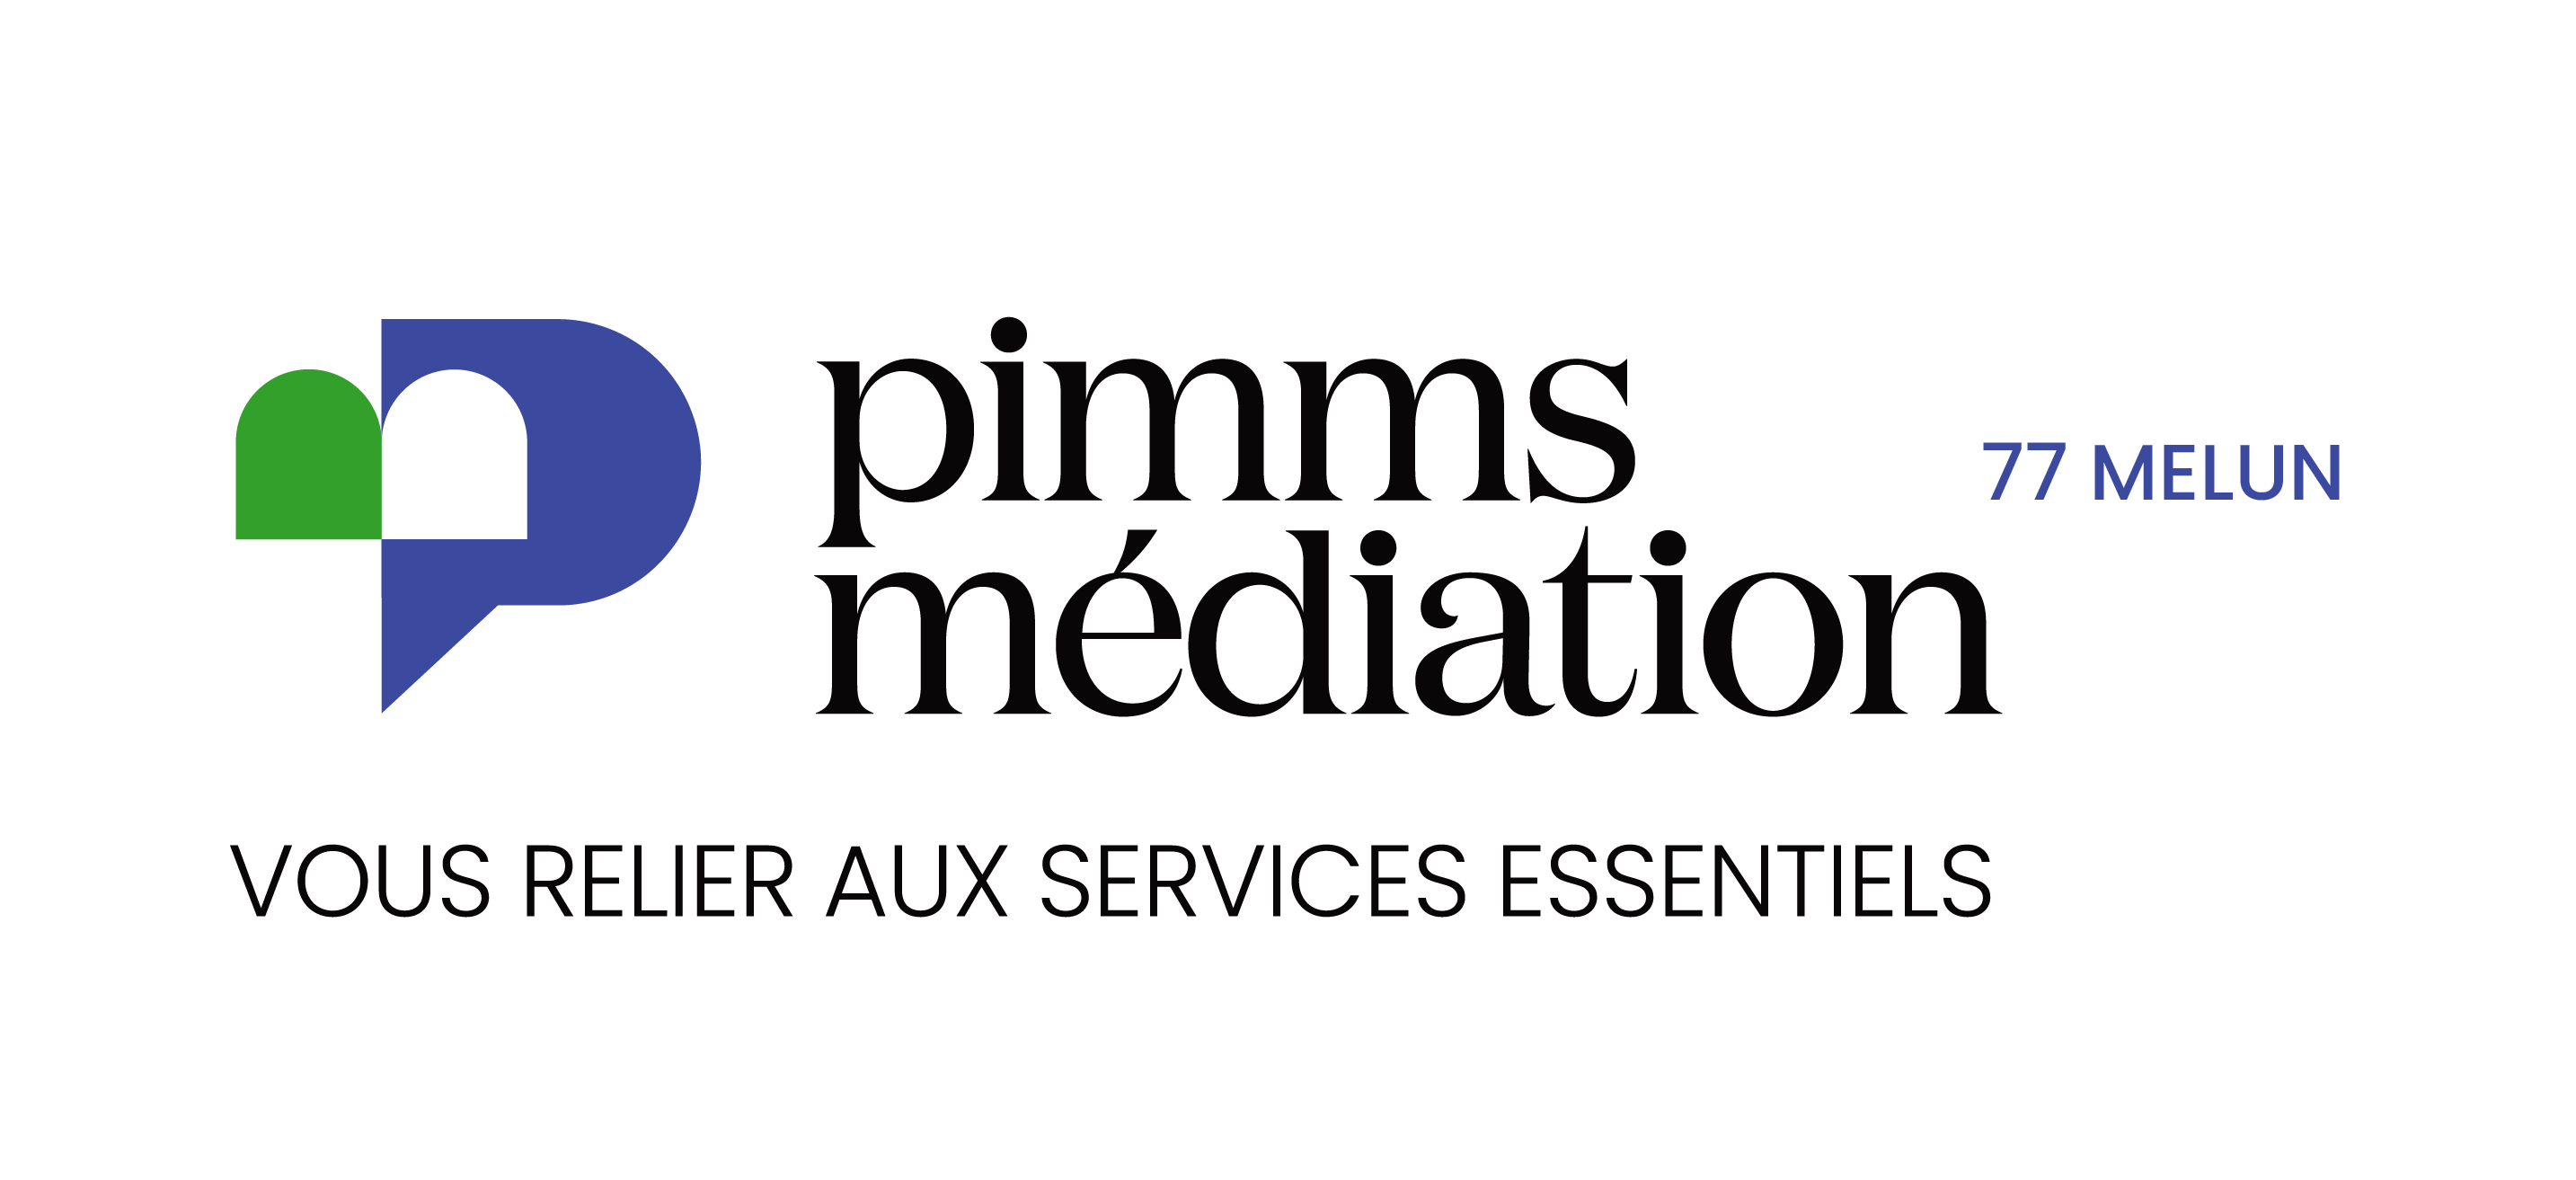 Pimms médiation 77 Melun – France services -Point conseil budget